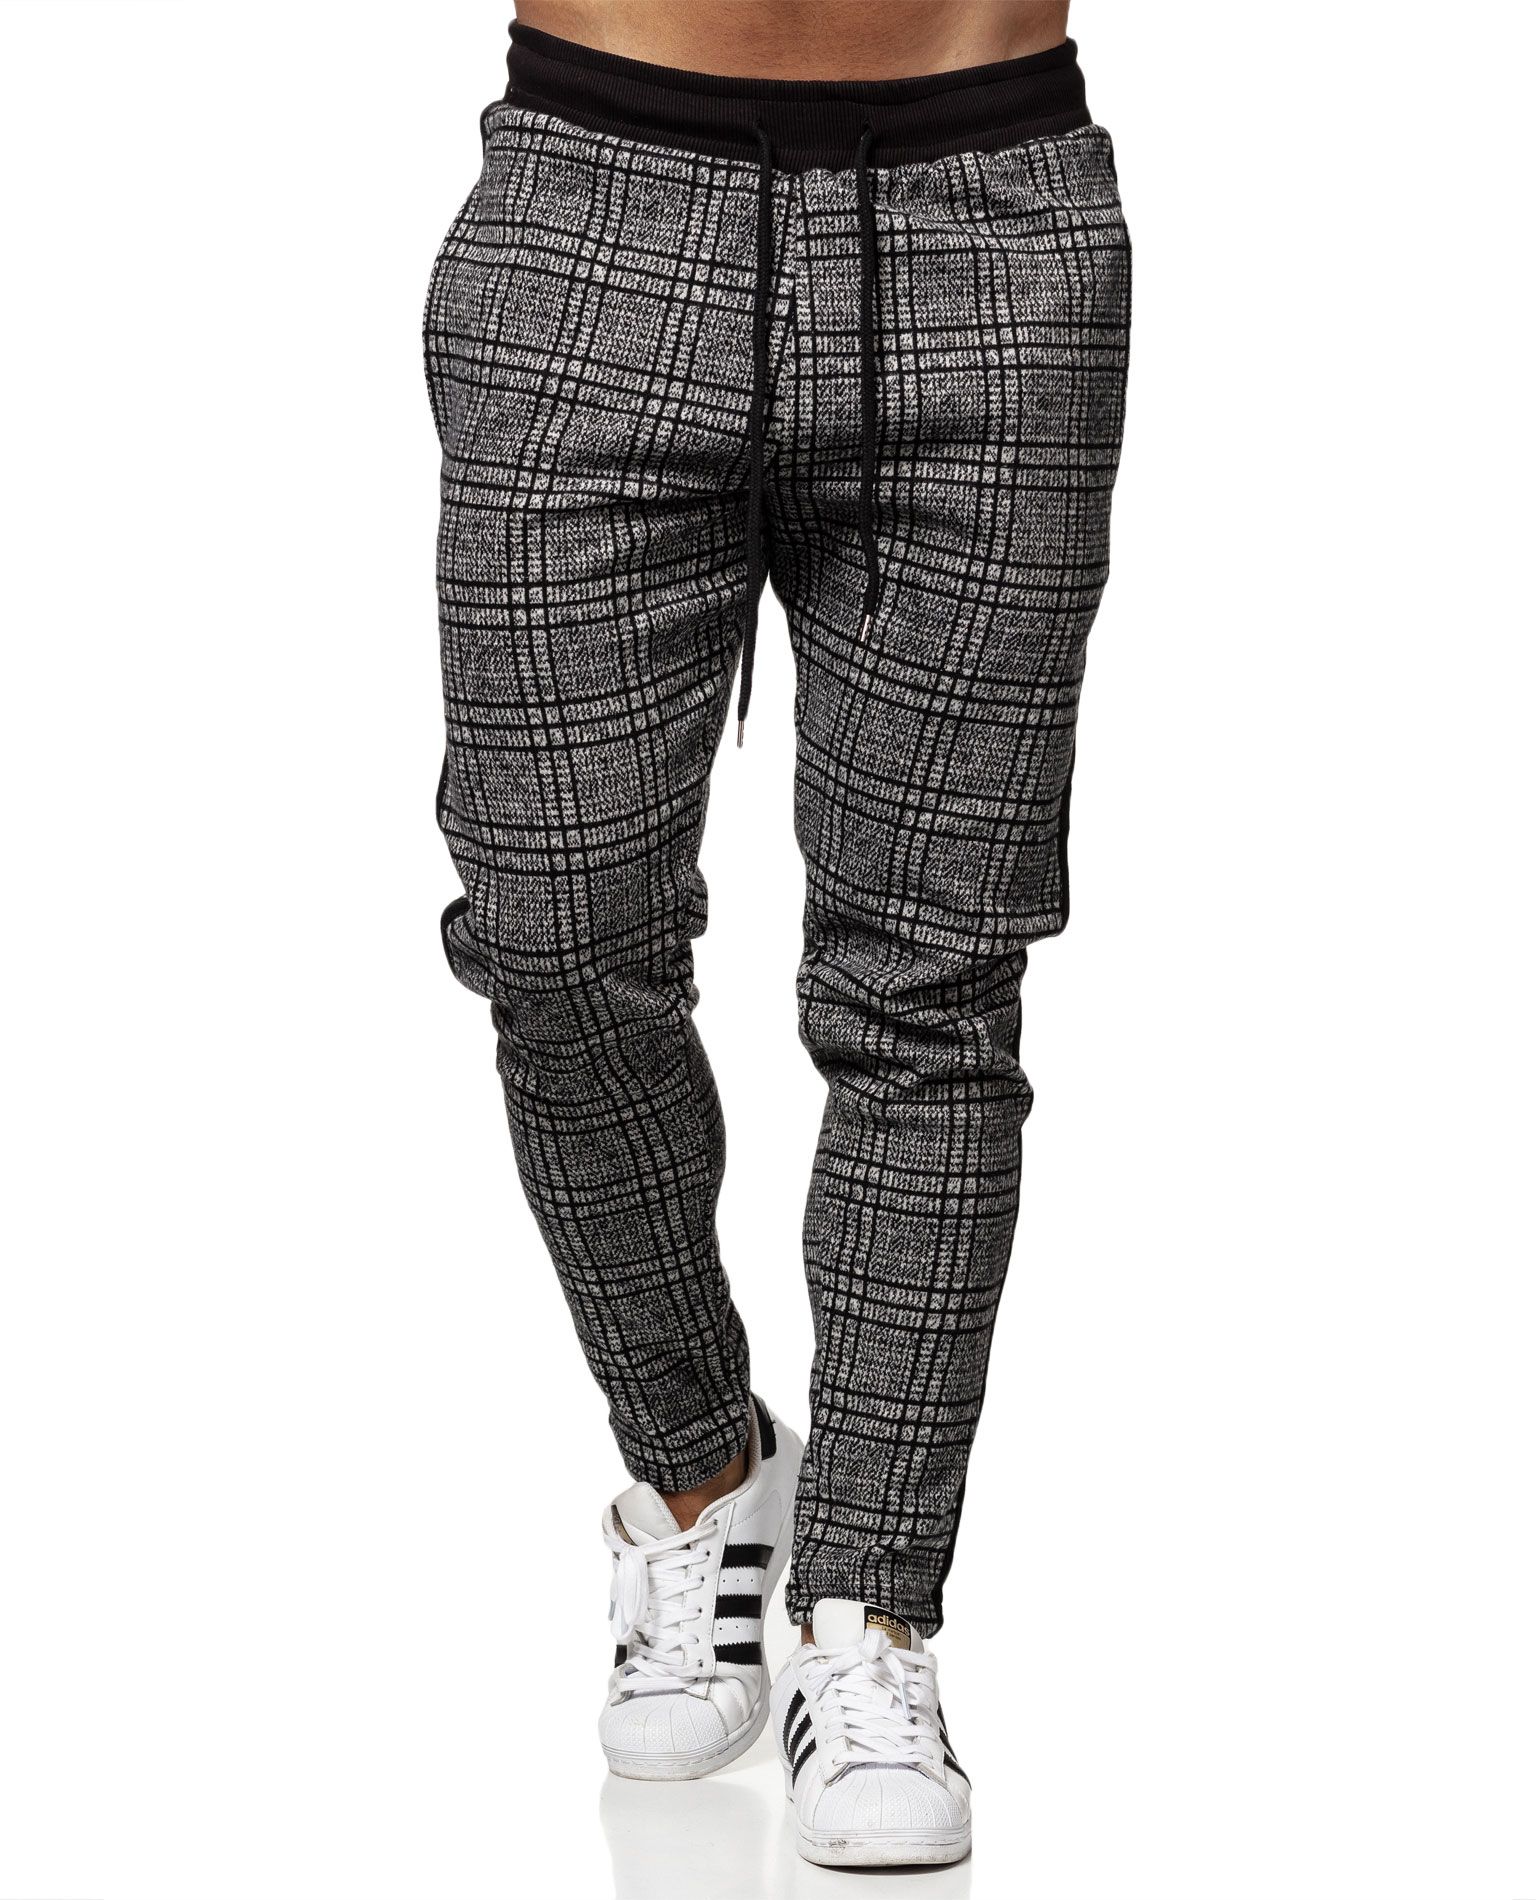 Soft Square Pants Carisma - 2090 - Trousers - Jerone.com